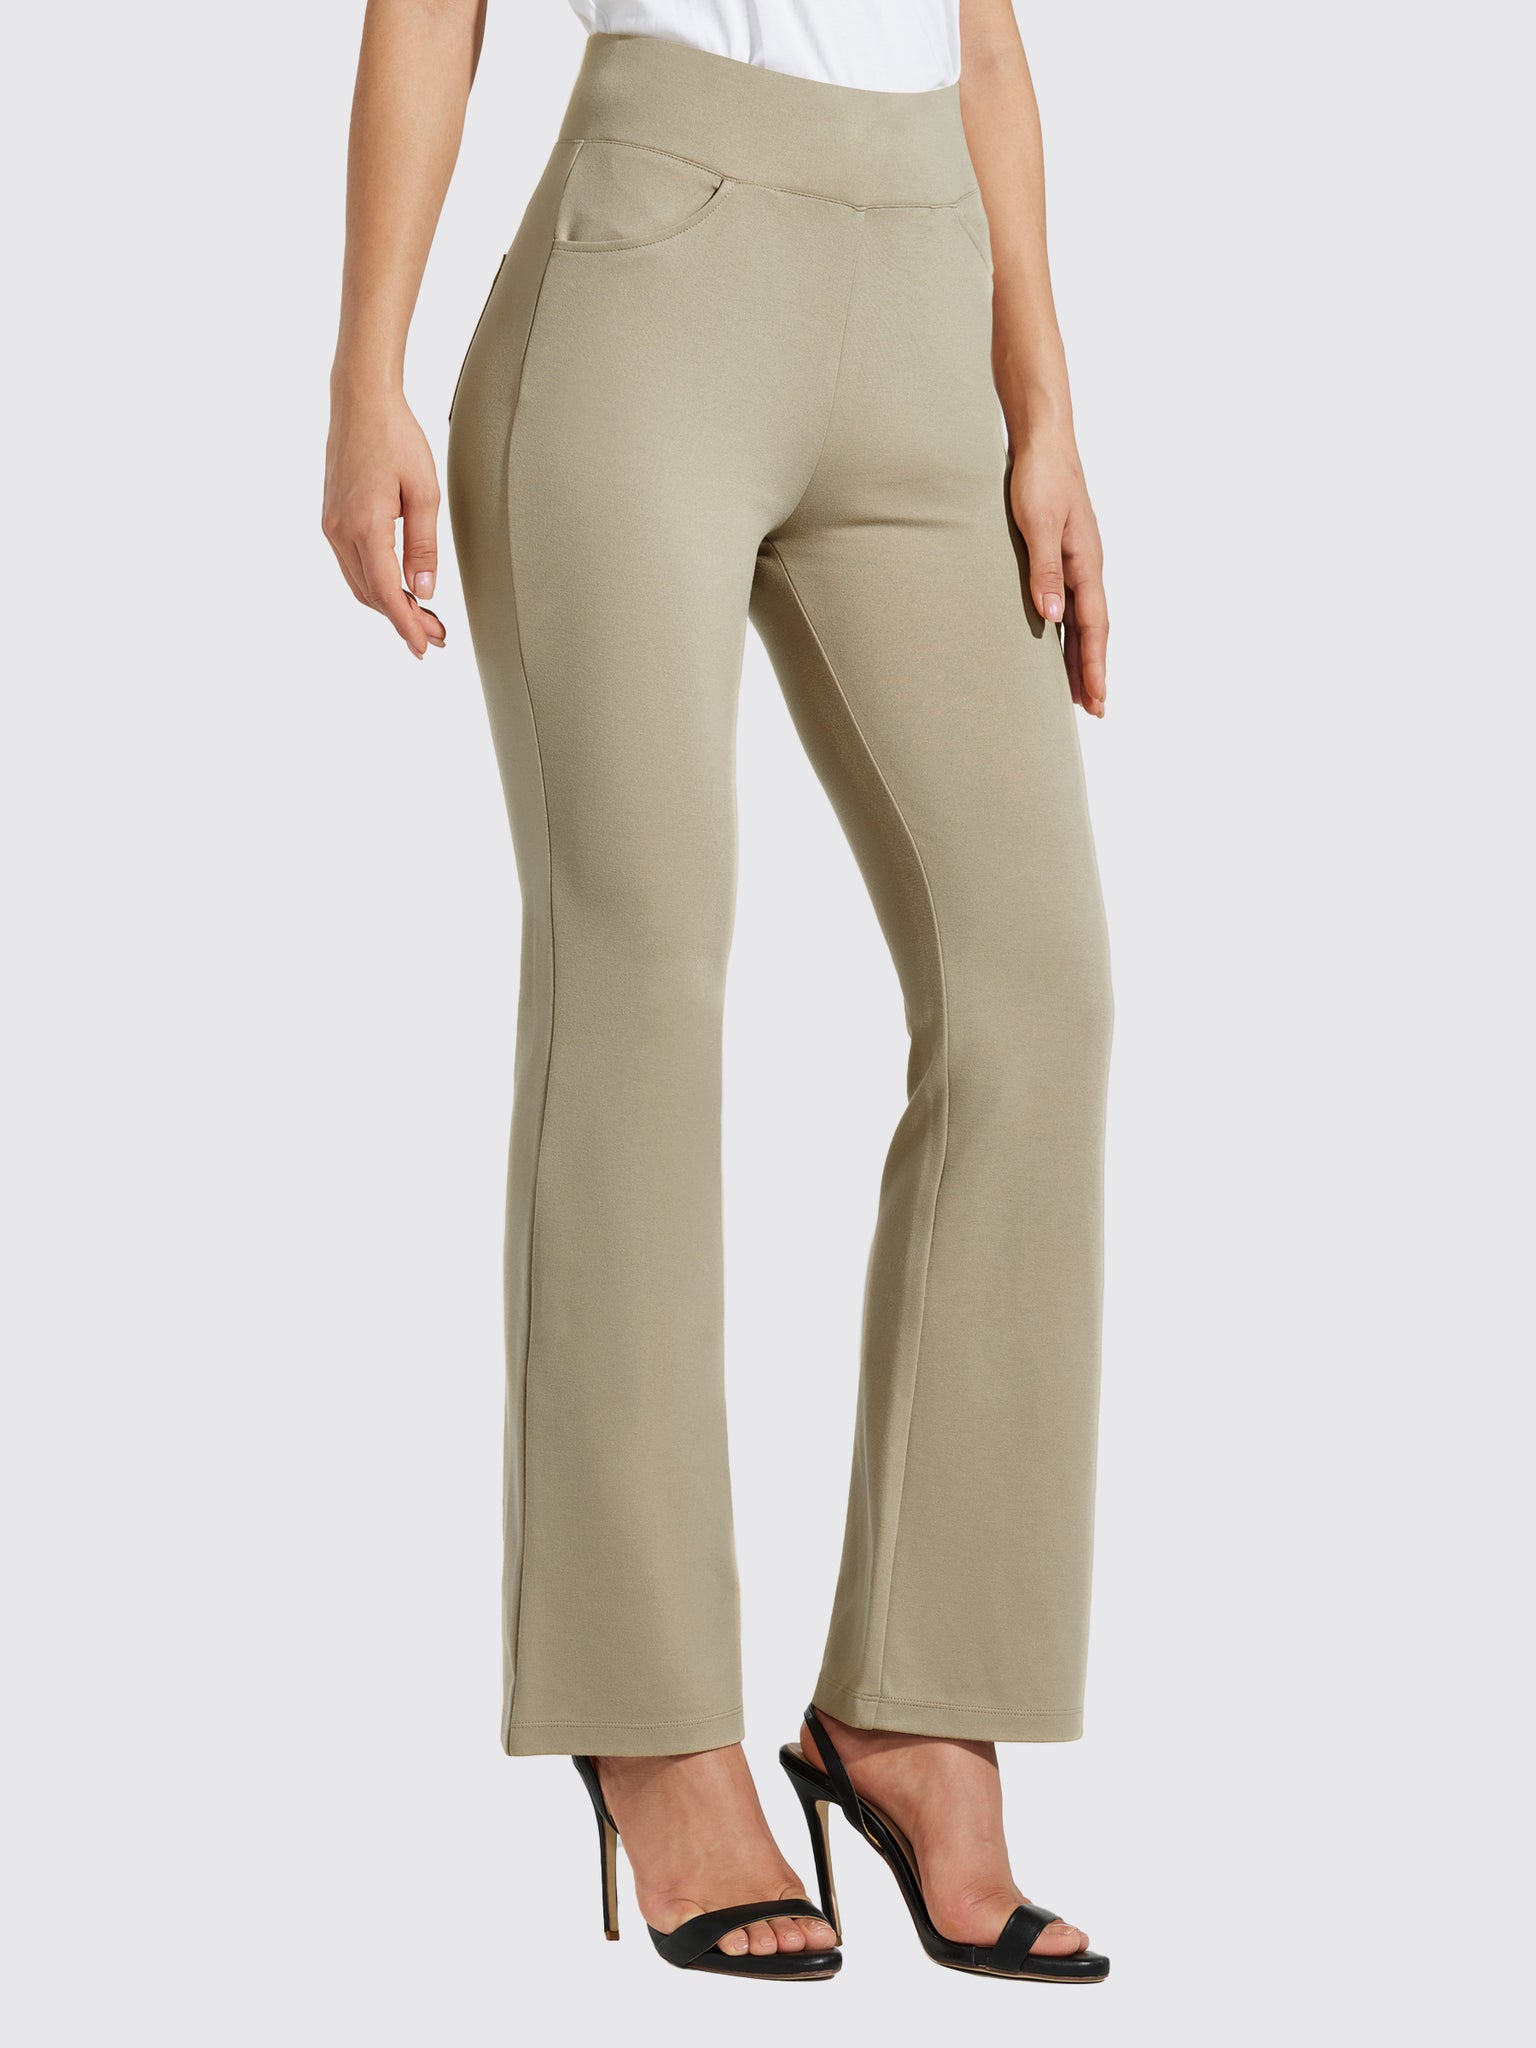 Women's Pull-On Slim Bootcut Pants_LightKhaki_model3